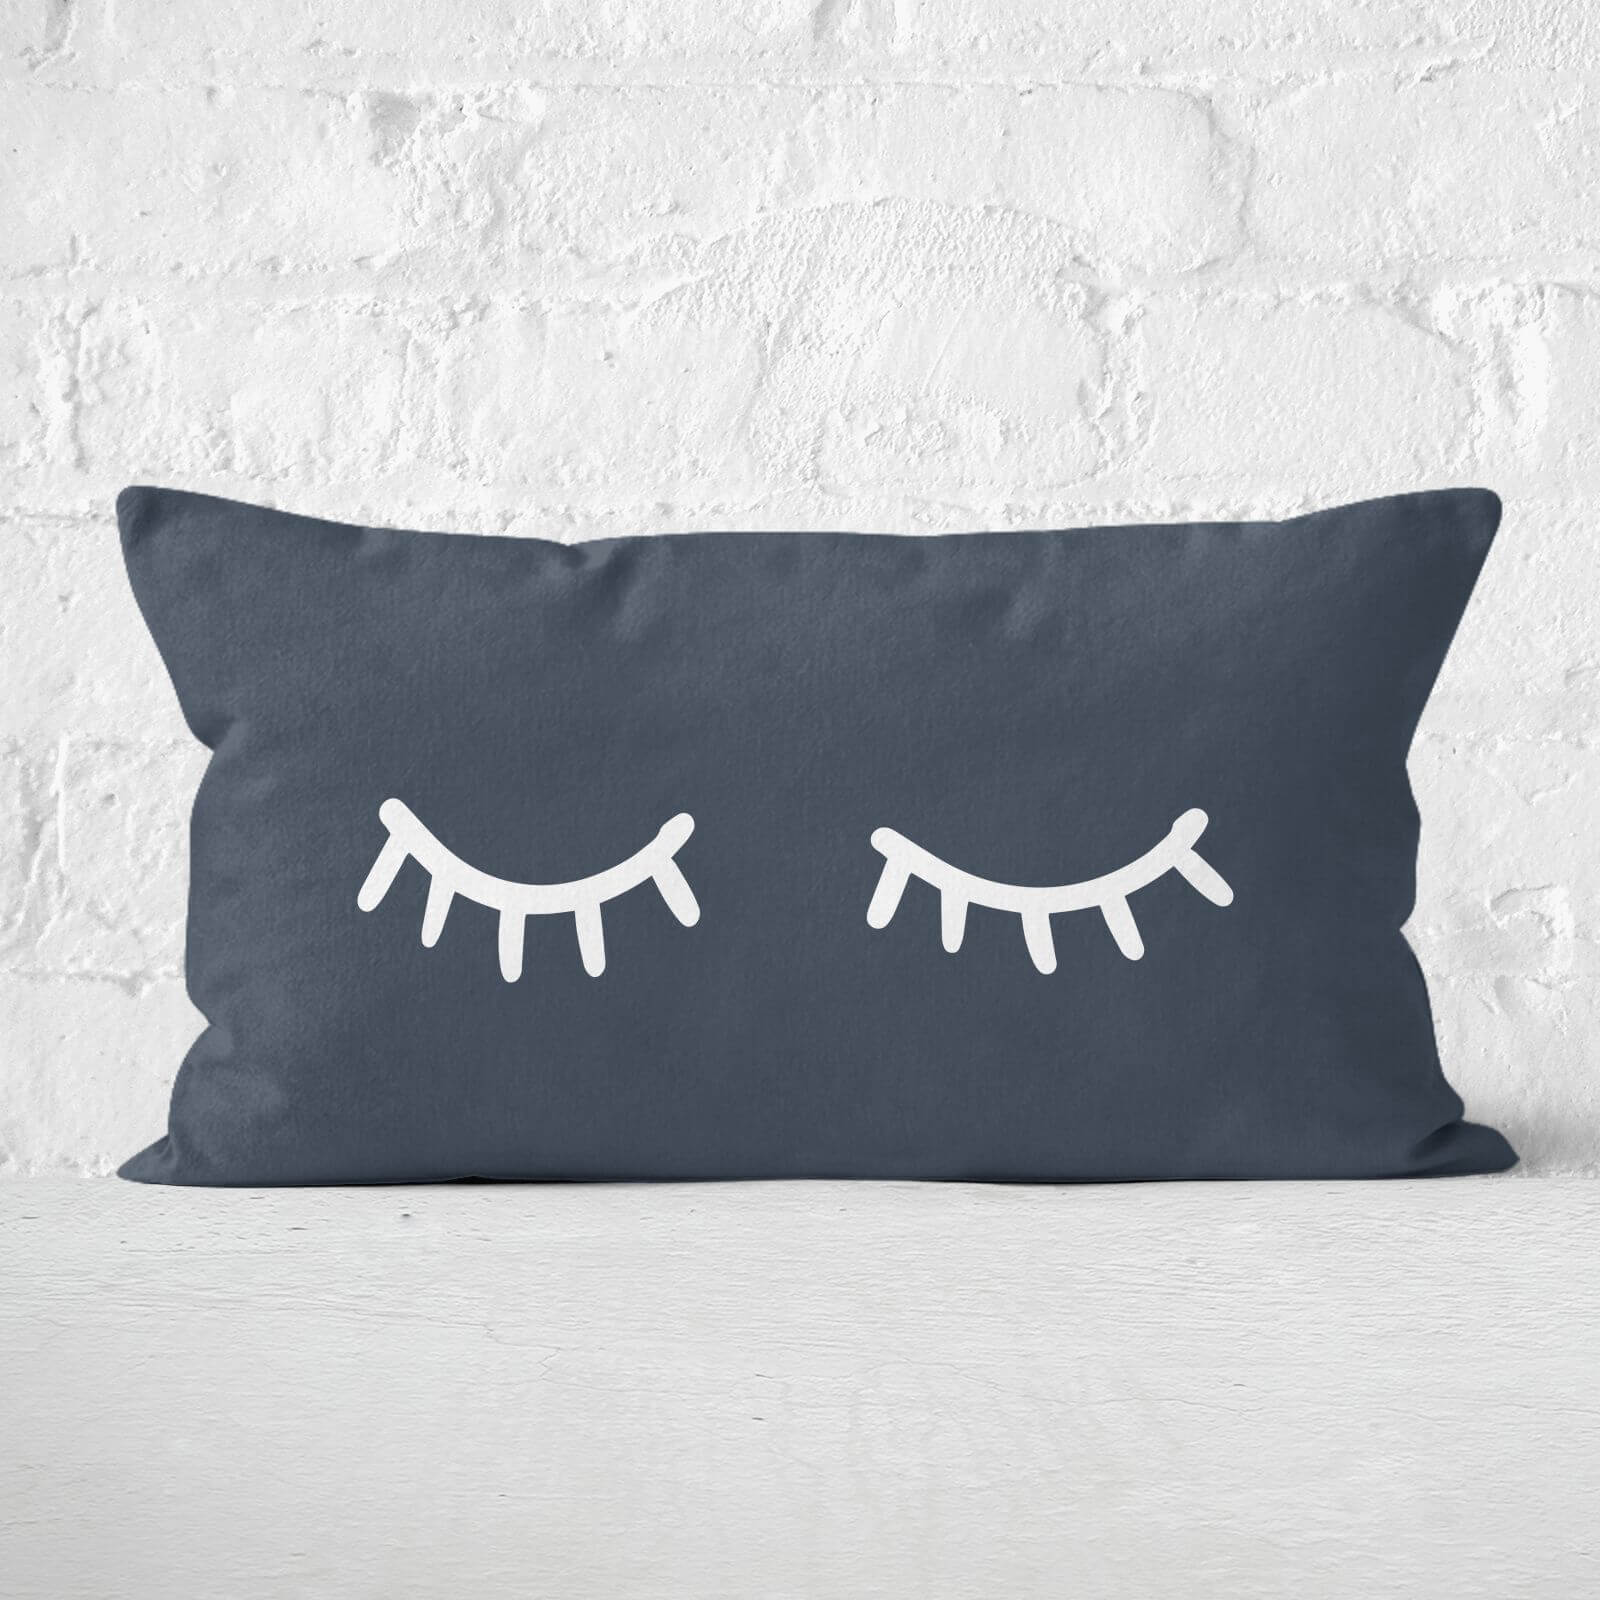 By Iwoot Sleepy eyes rectangular cushion - soft touch